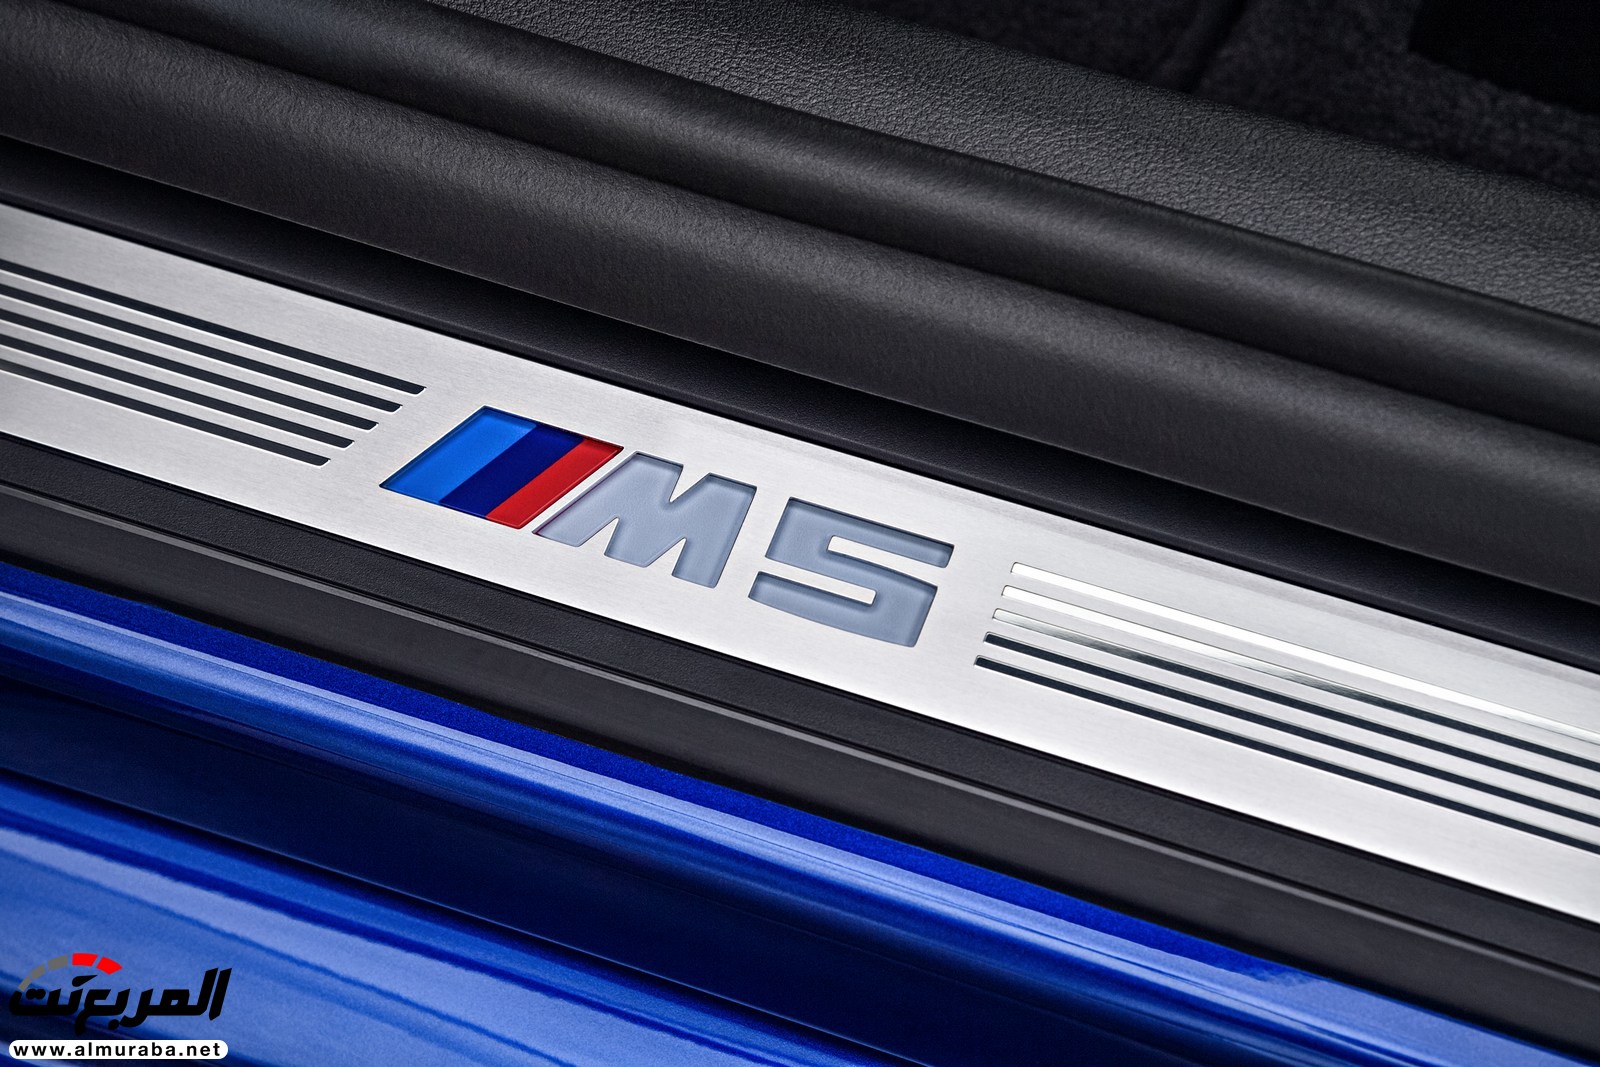 بي ام دبليو M5 2018 تكشف نفسها رسمياً بقوة ٦٠٠ حصان "صور ومواصفات" BMW 56